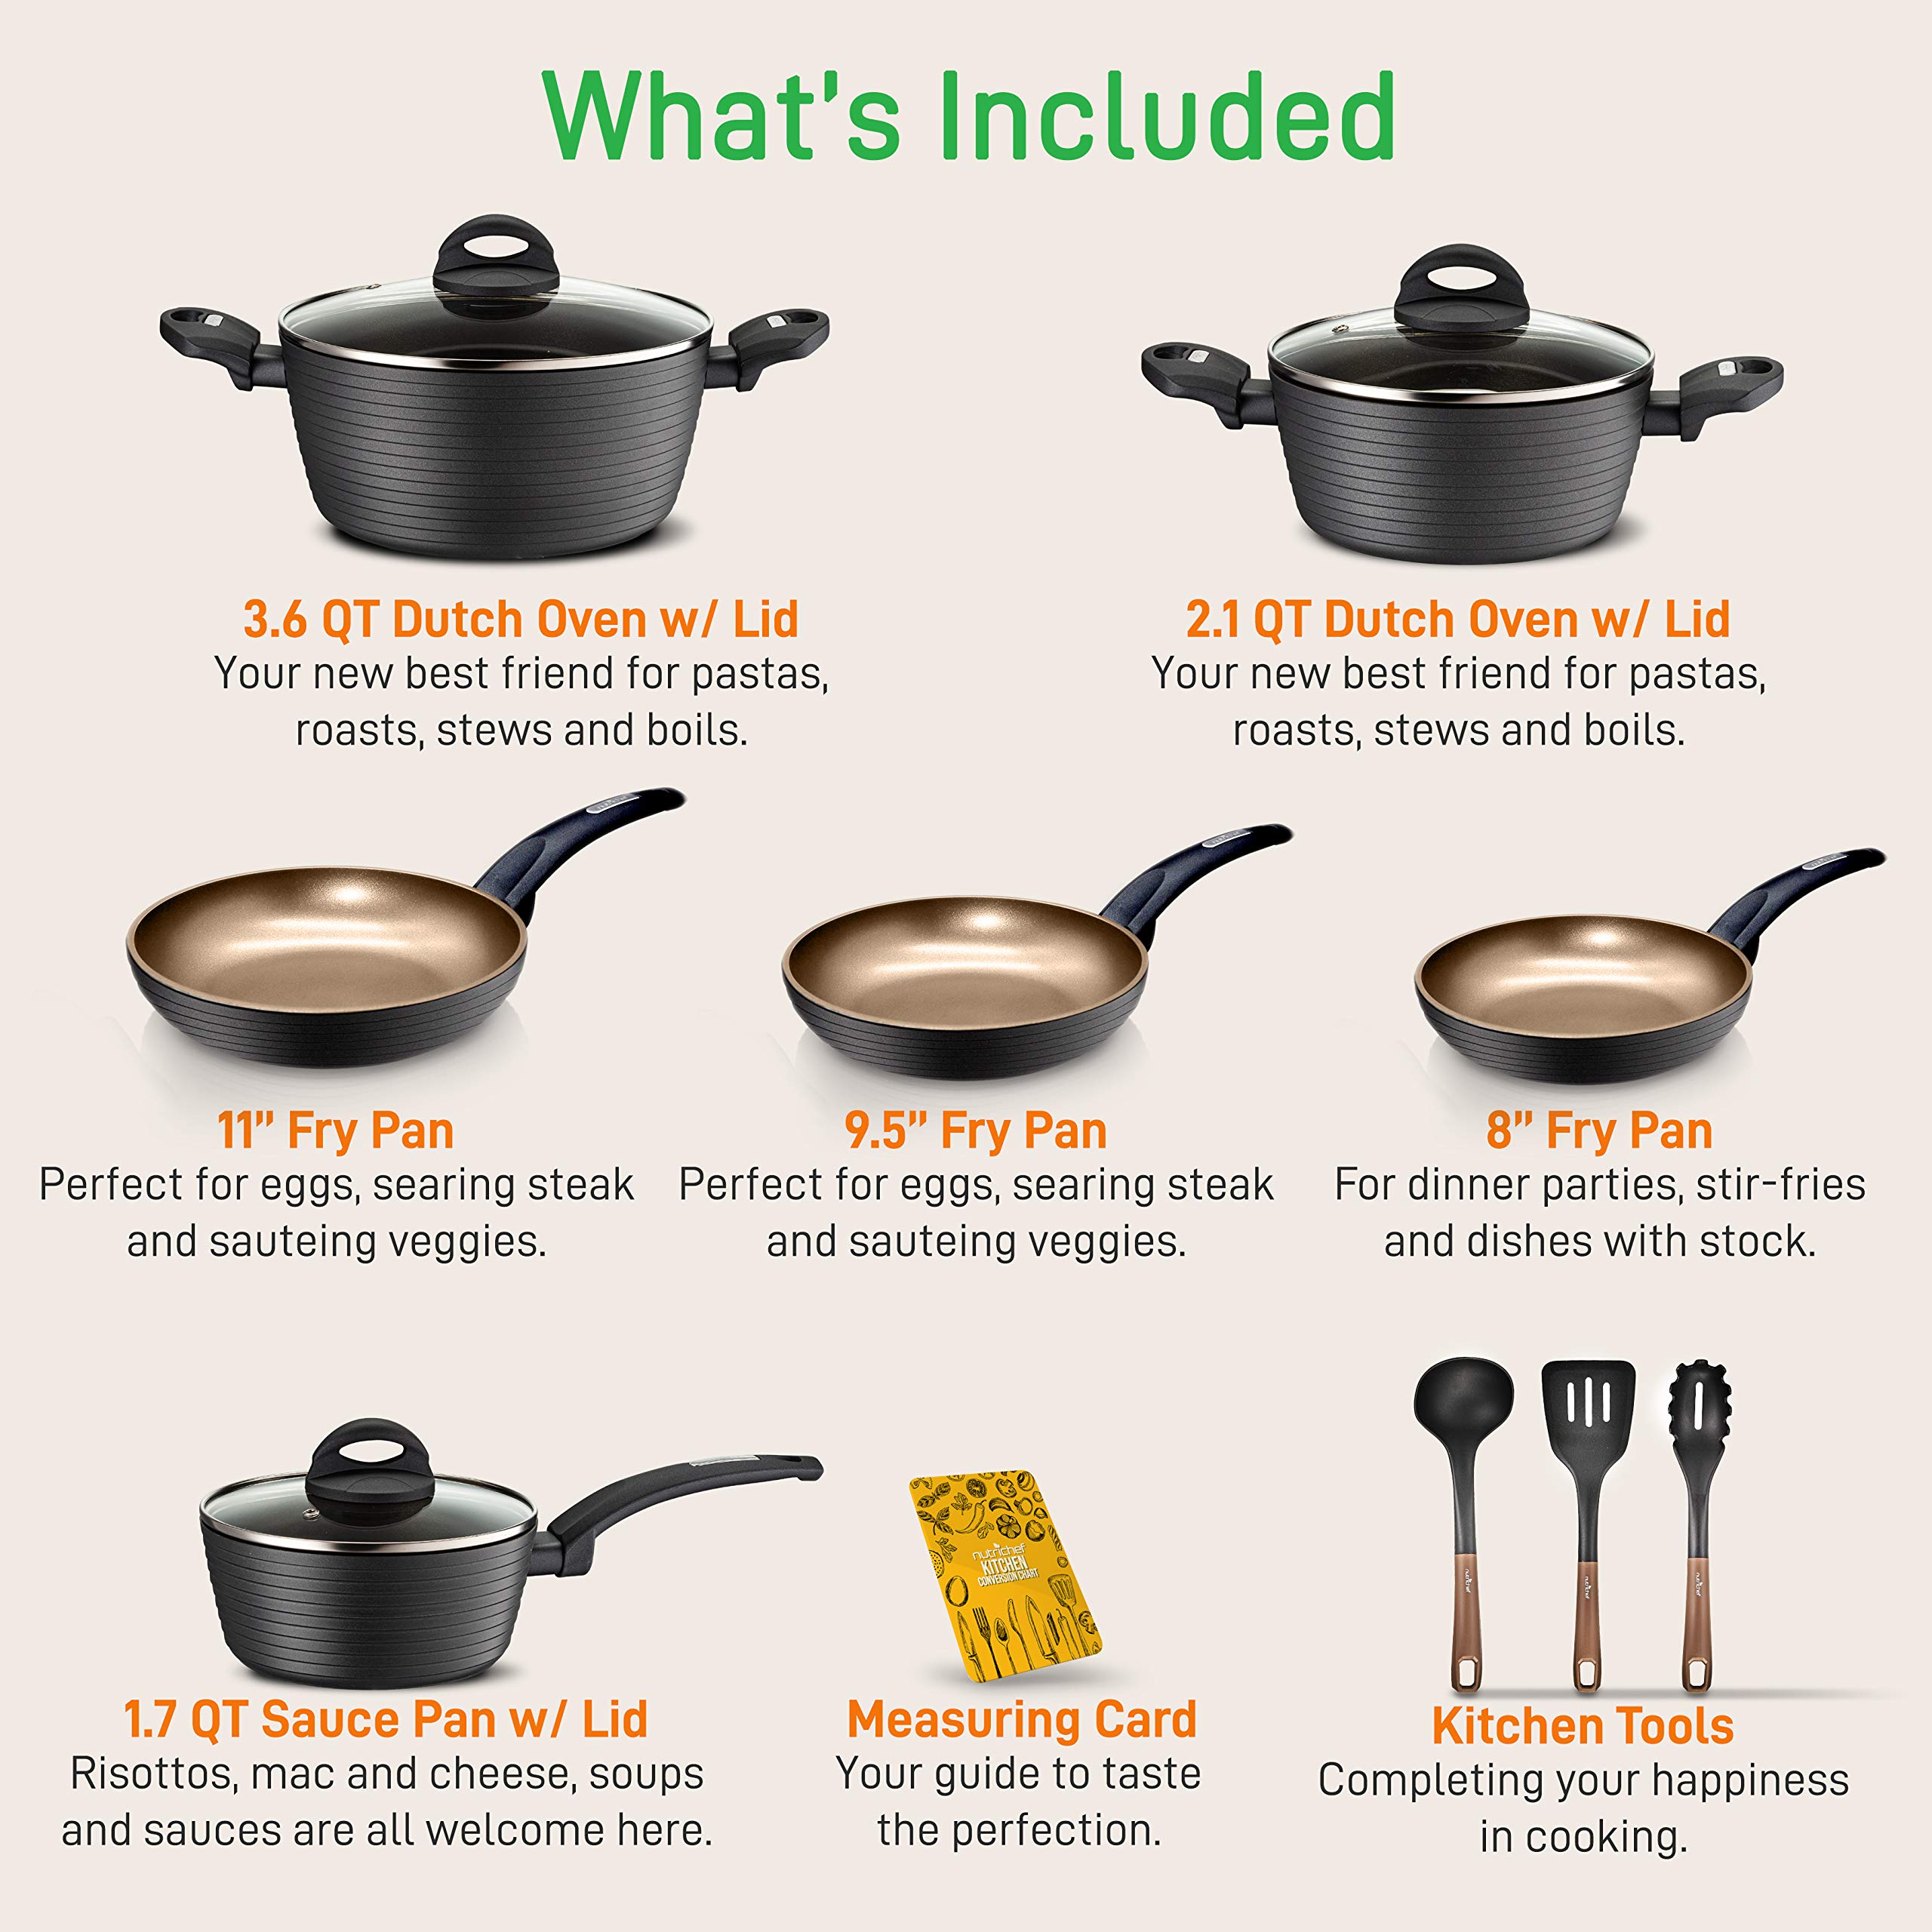 NutriChef 12-Piece Nonstick Kitchen Cookware Set - Professional Hard Anodized Home Kitchen Ware Pots and Pan Set, Includes Saucepan, Frying Pans, Cooking Pots, Dutch Oven Pot, Lids, Utensil -